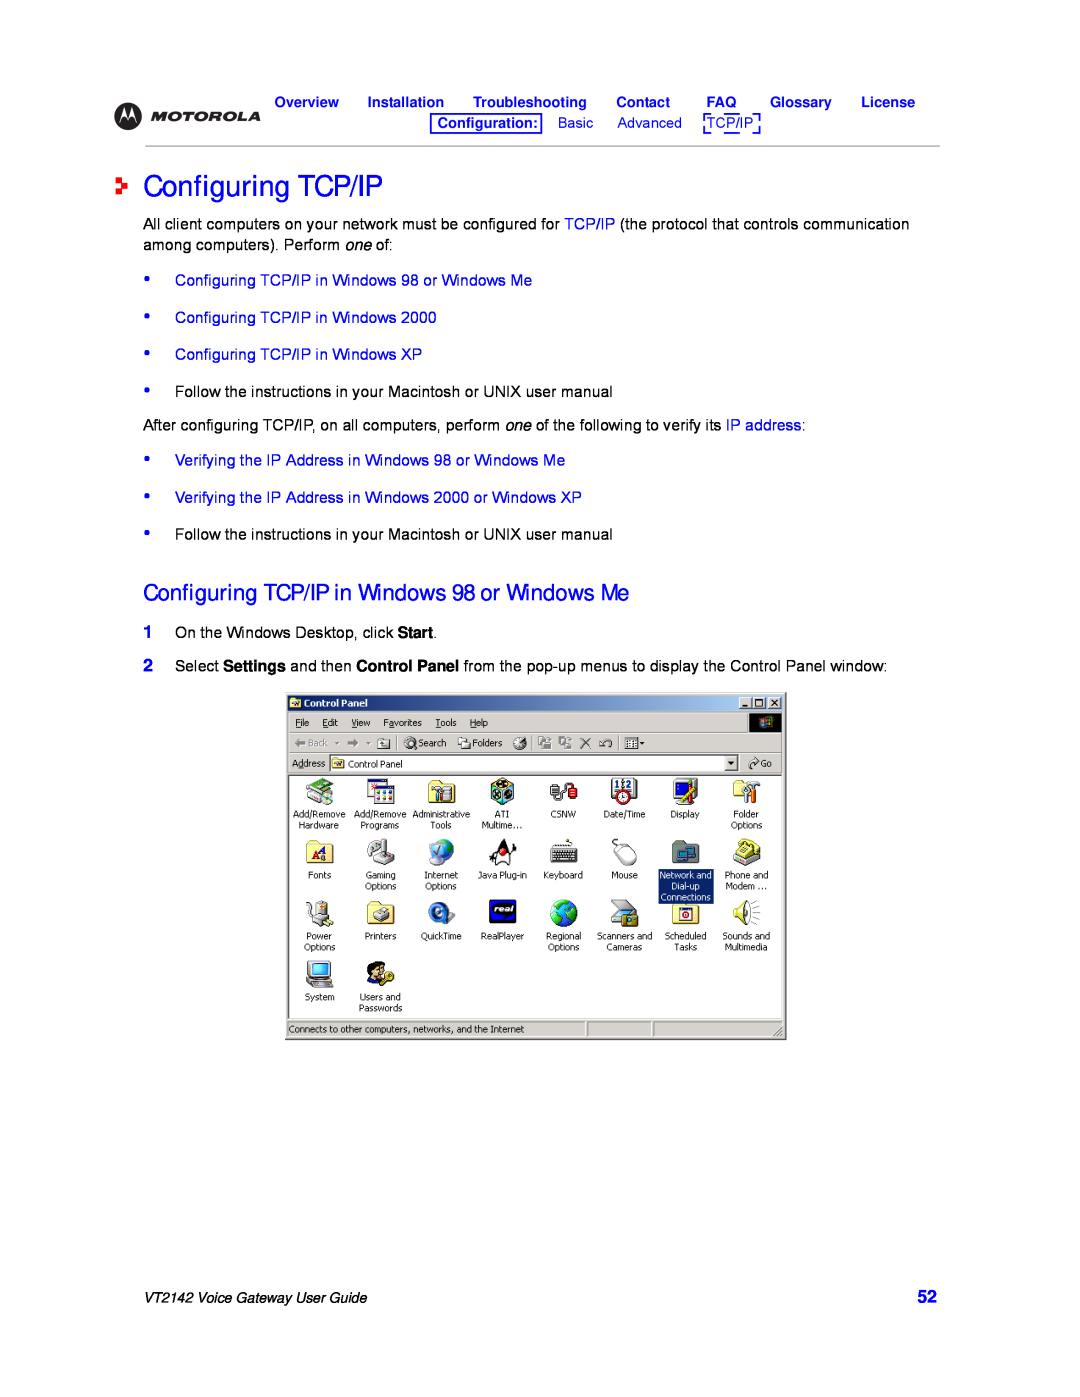 Motorola VT2142 Configuring TCP/IP in Windows 98 or Windows Me, Verifying the IP Address in Windows 98 or Windows Me 